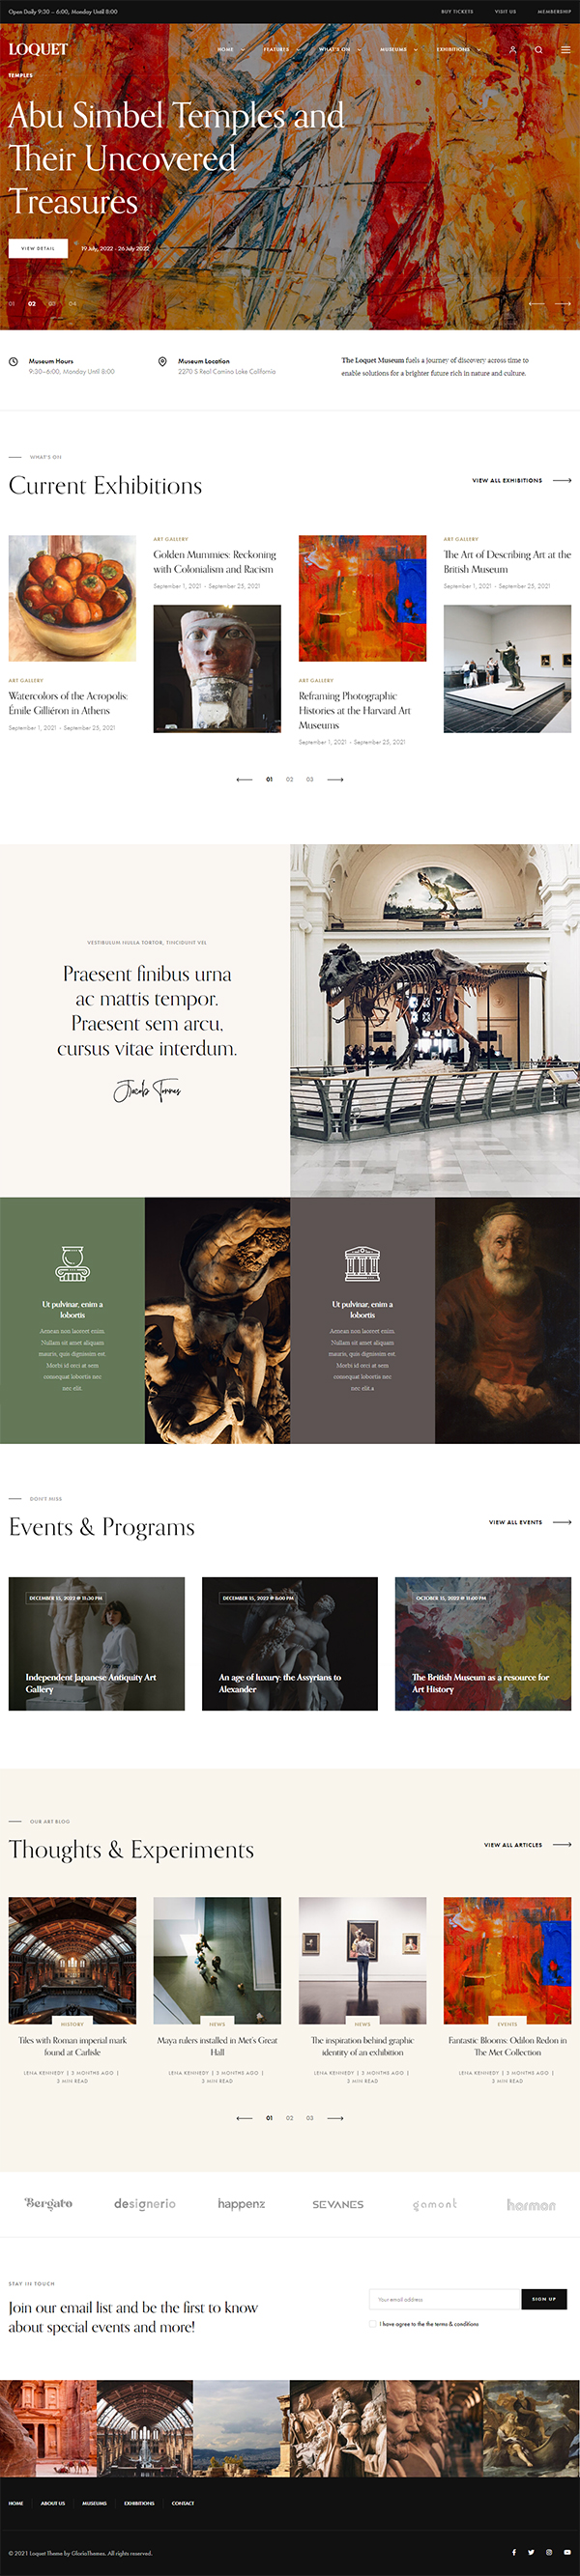 Loquet - Museum & History WordPress Theme